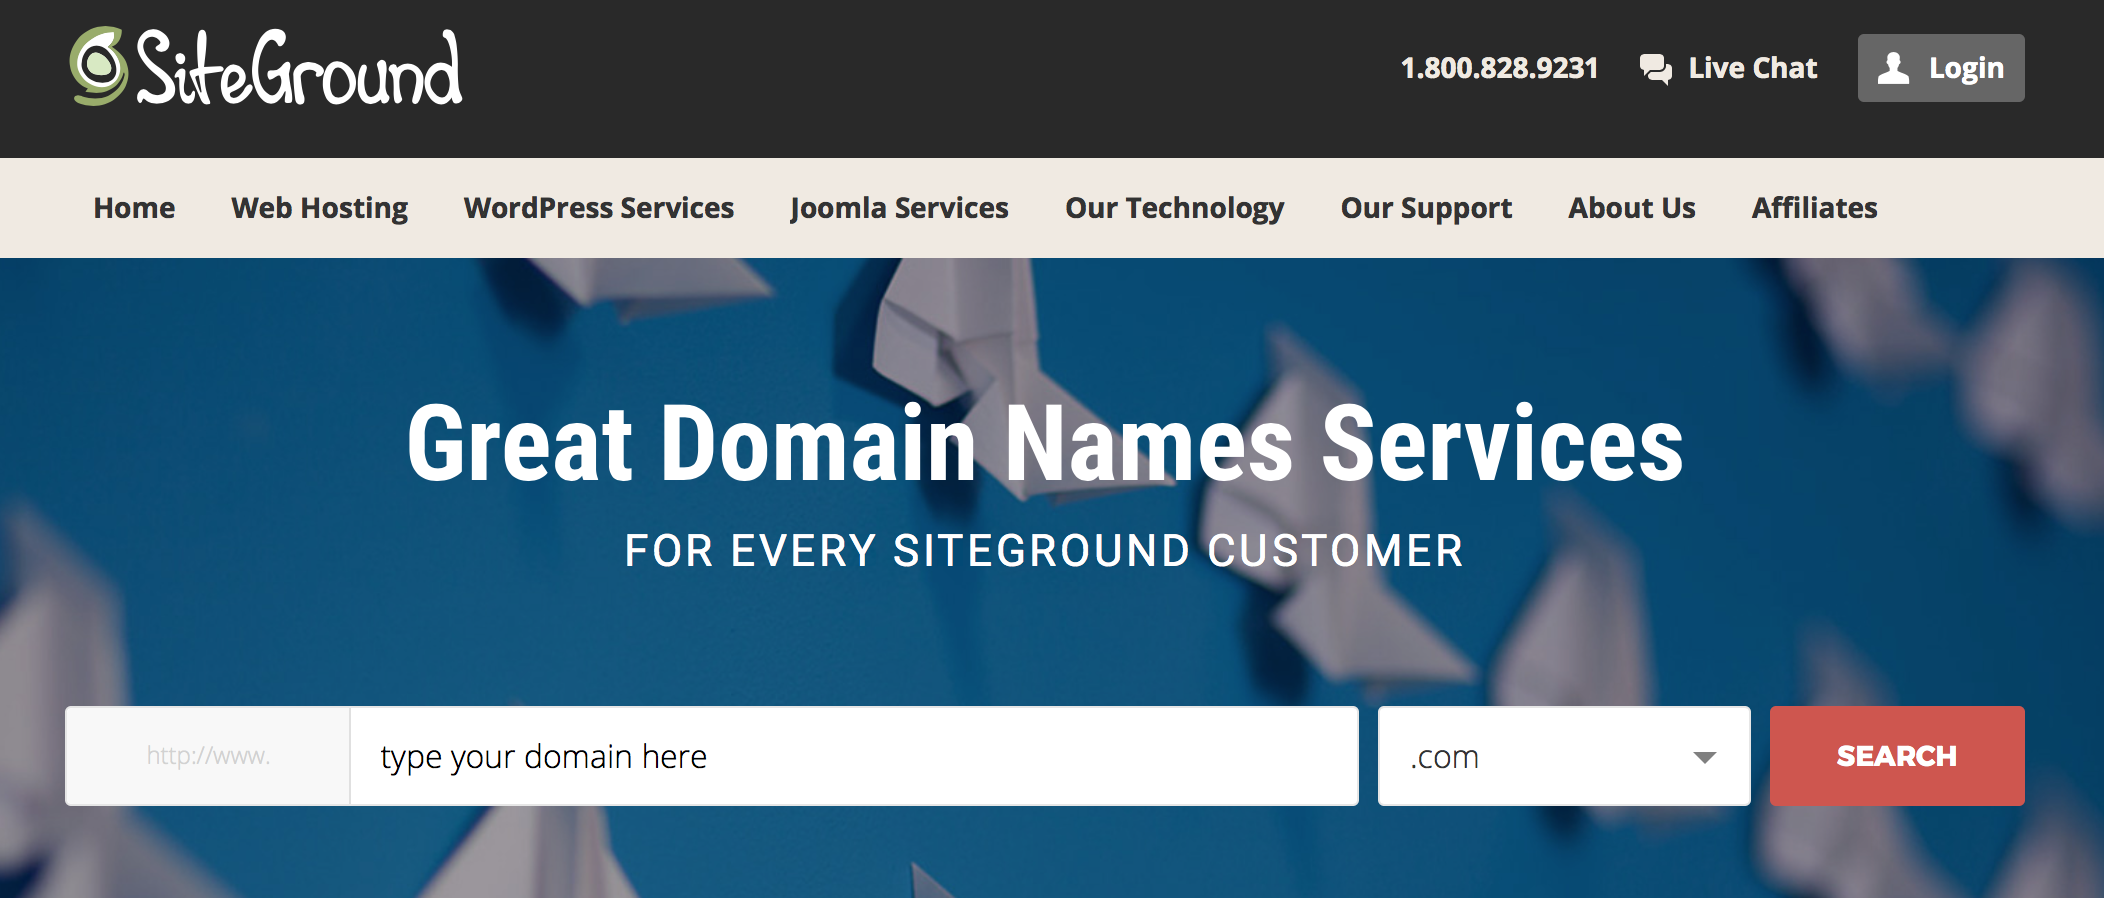 Siteground Domain Name